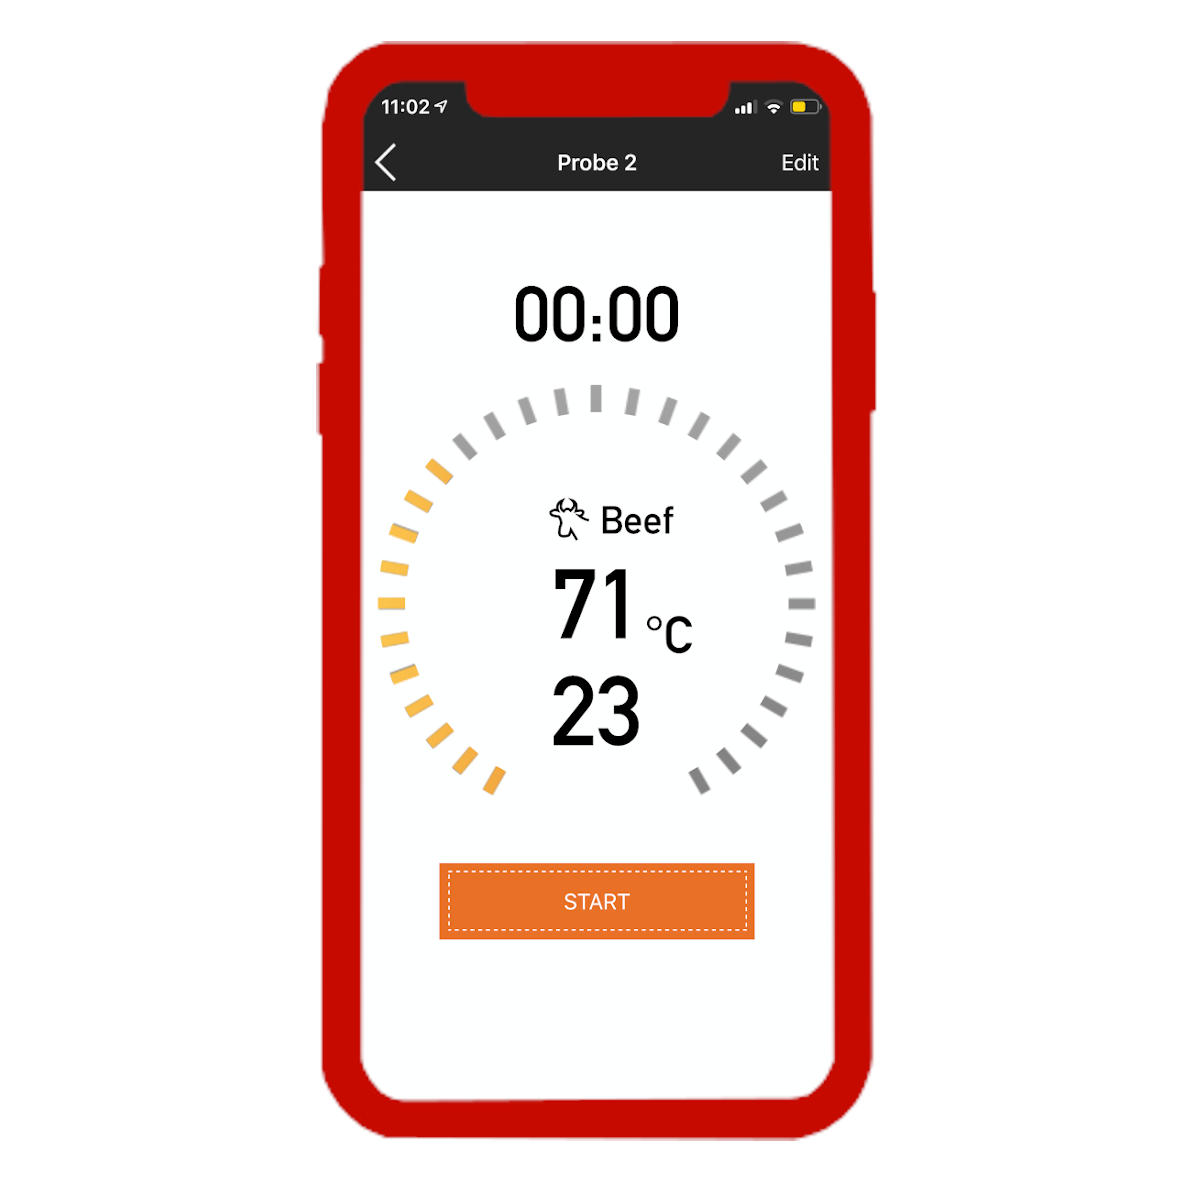 SANTOS Smart BBQ Thermometer, Bluetooth